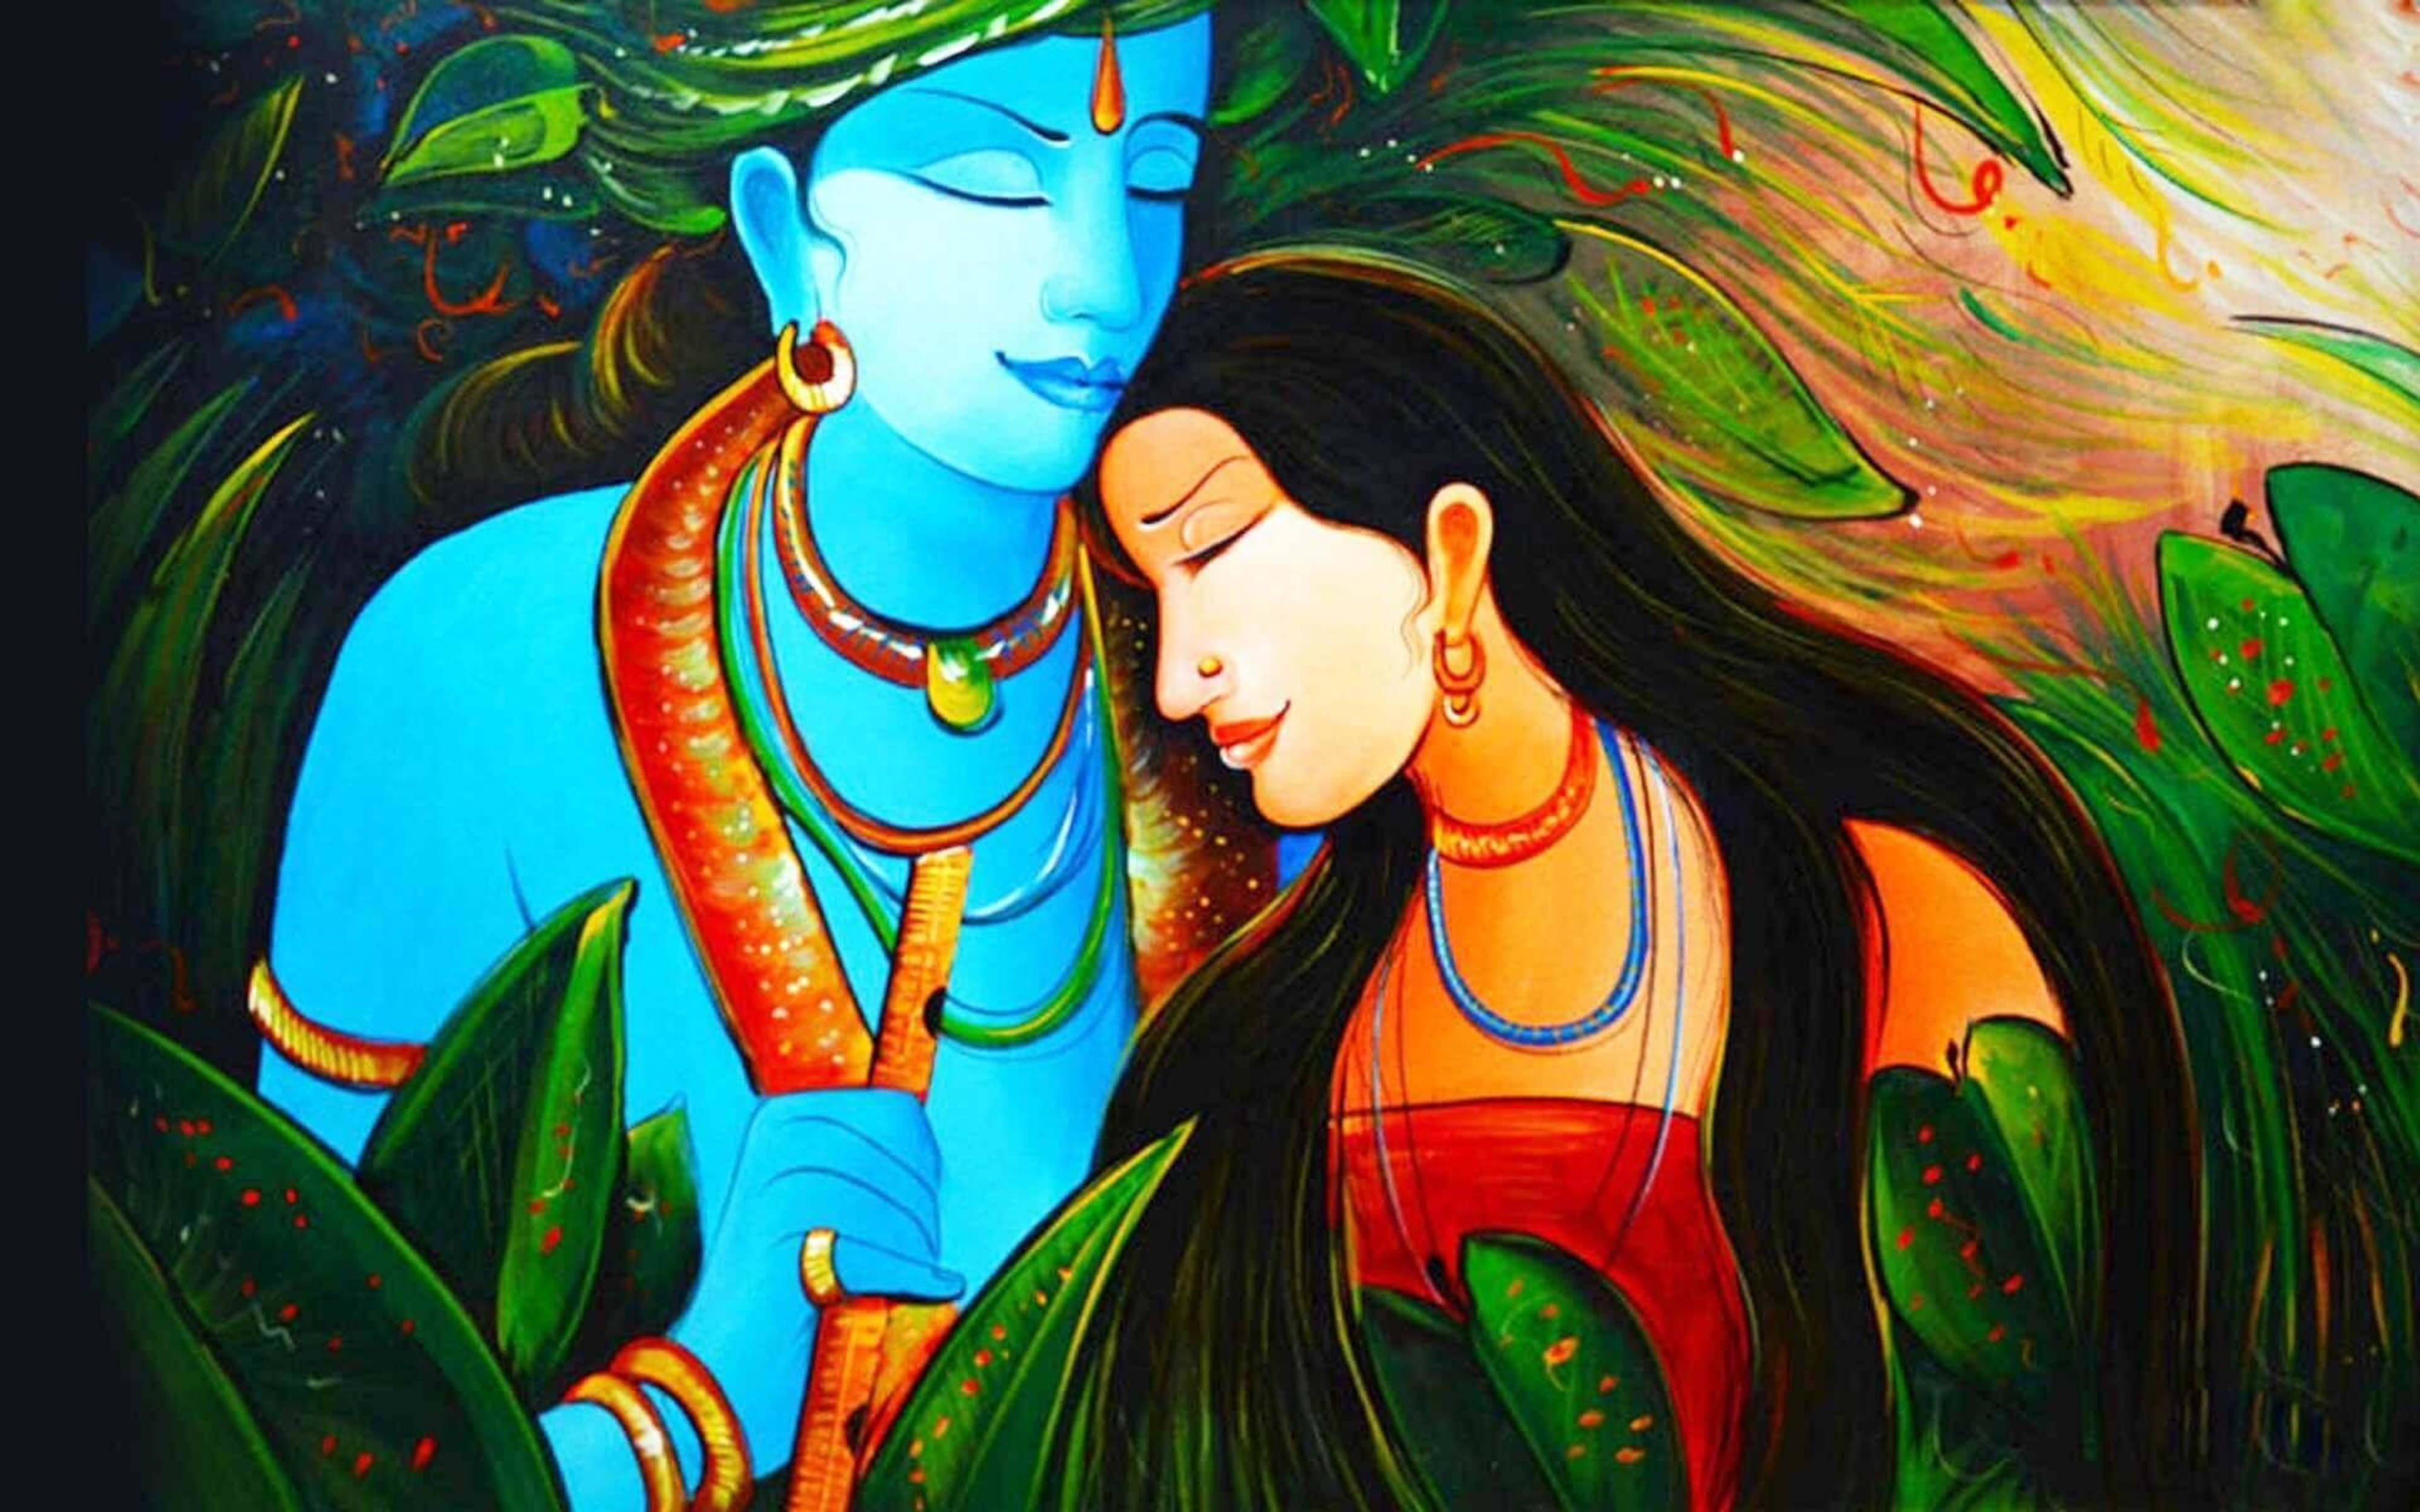 Download Lord Krishna 4k And Hindu Goddess Lady Radha Wallpaper | Wallpapers .com